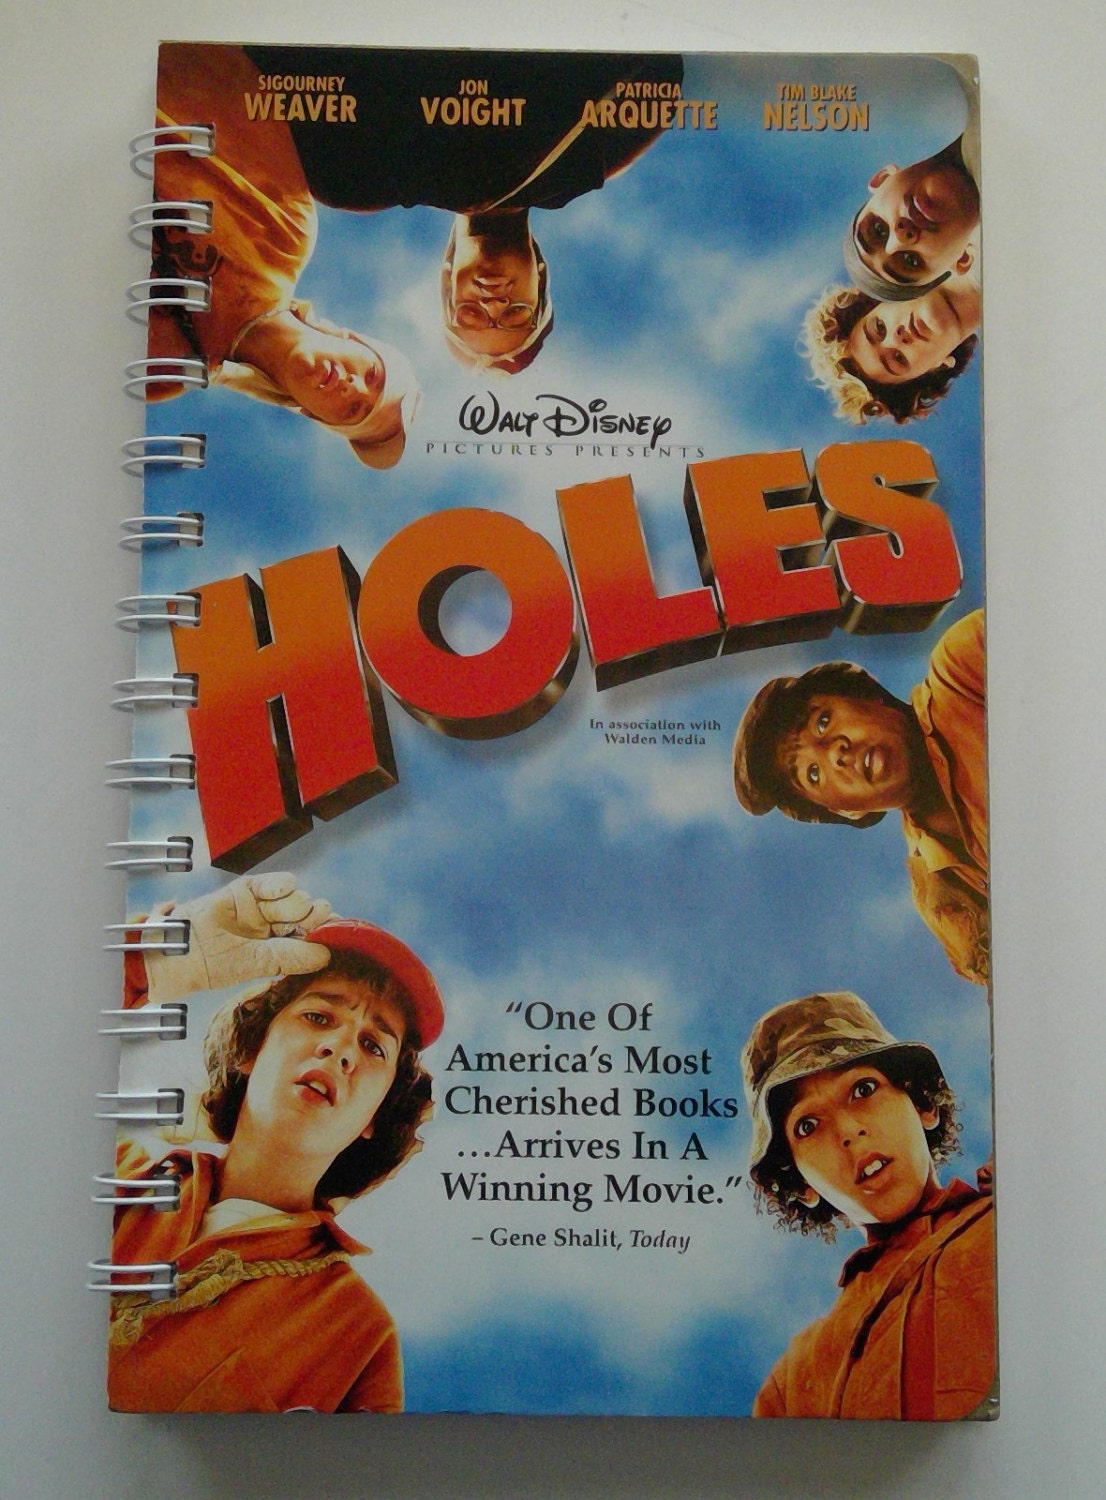 Holes DVD Disney  Disney presents, Walt disney pictures, Disney pictures